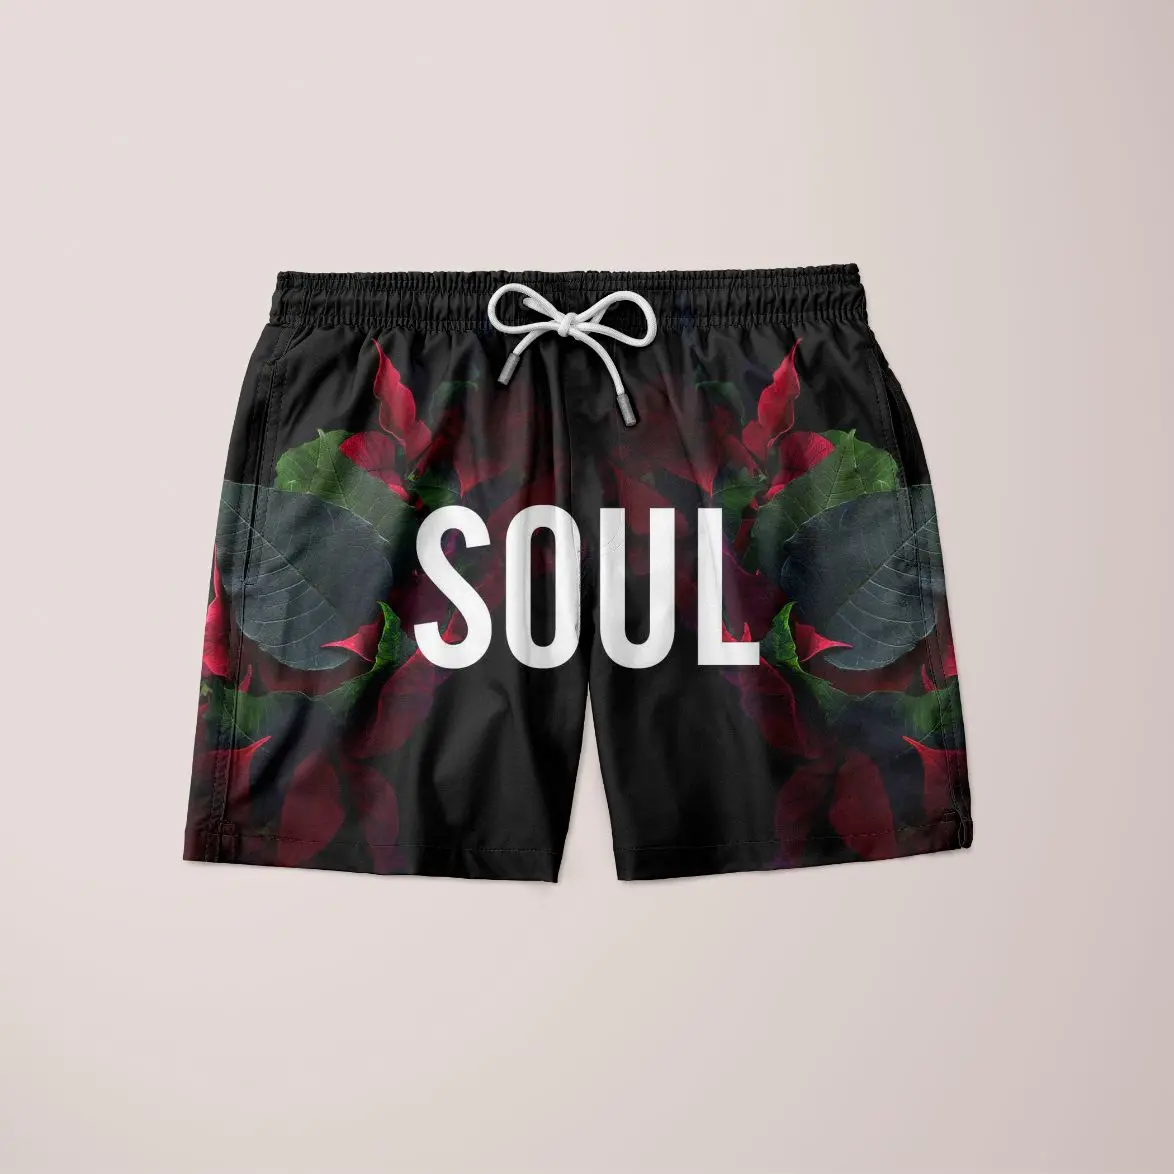 Soul Shorts